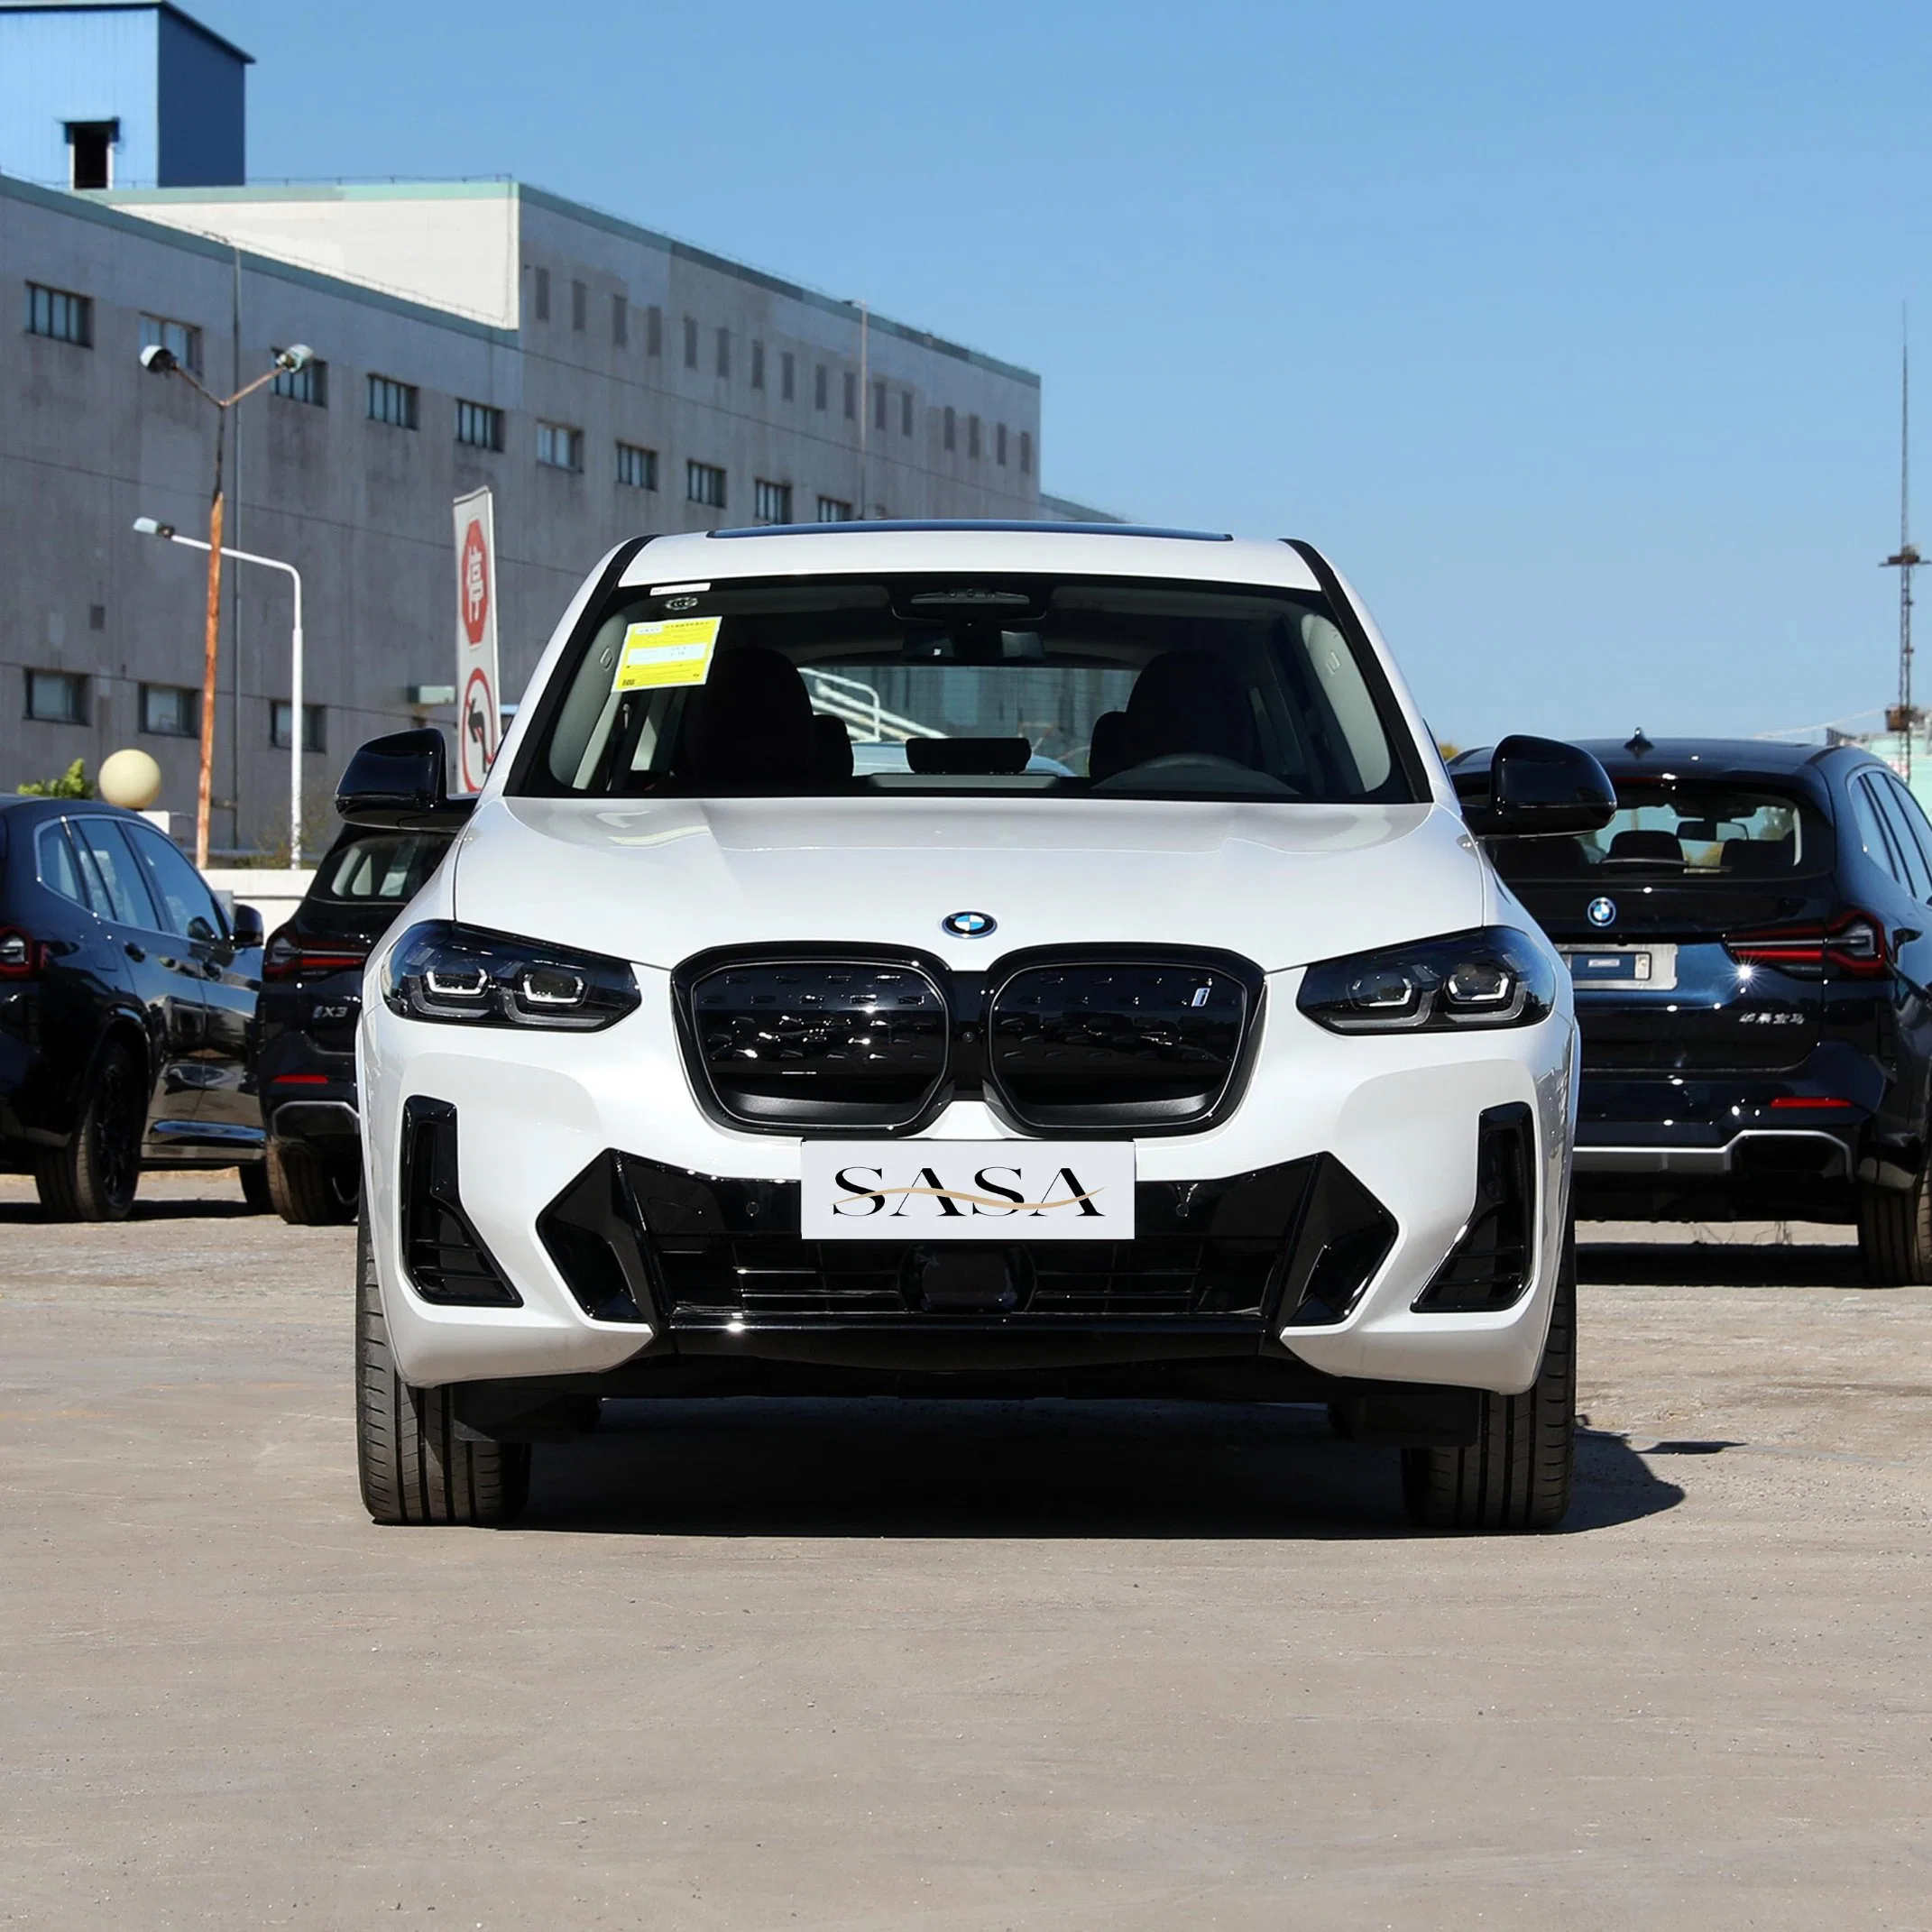 Carro elétrico BMW IX3 novos veículos de energia usados carros IX3 Veículos elétricos puros SUV modelo de chumbo automóvel venda de veículos elétricos de veículos elétricos (EV)